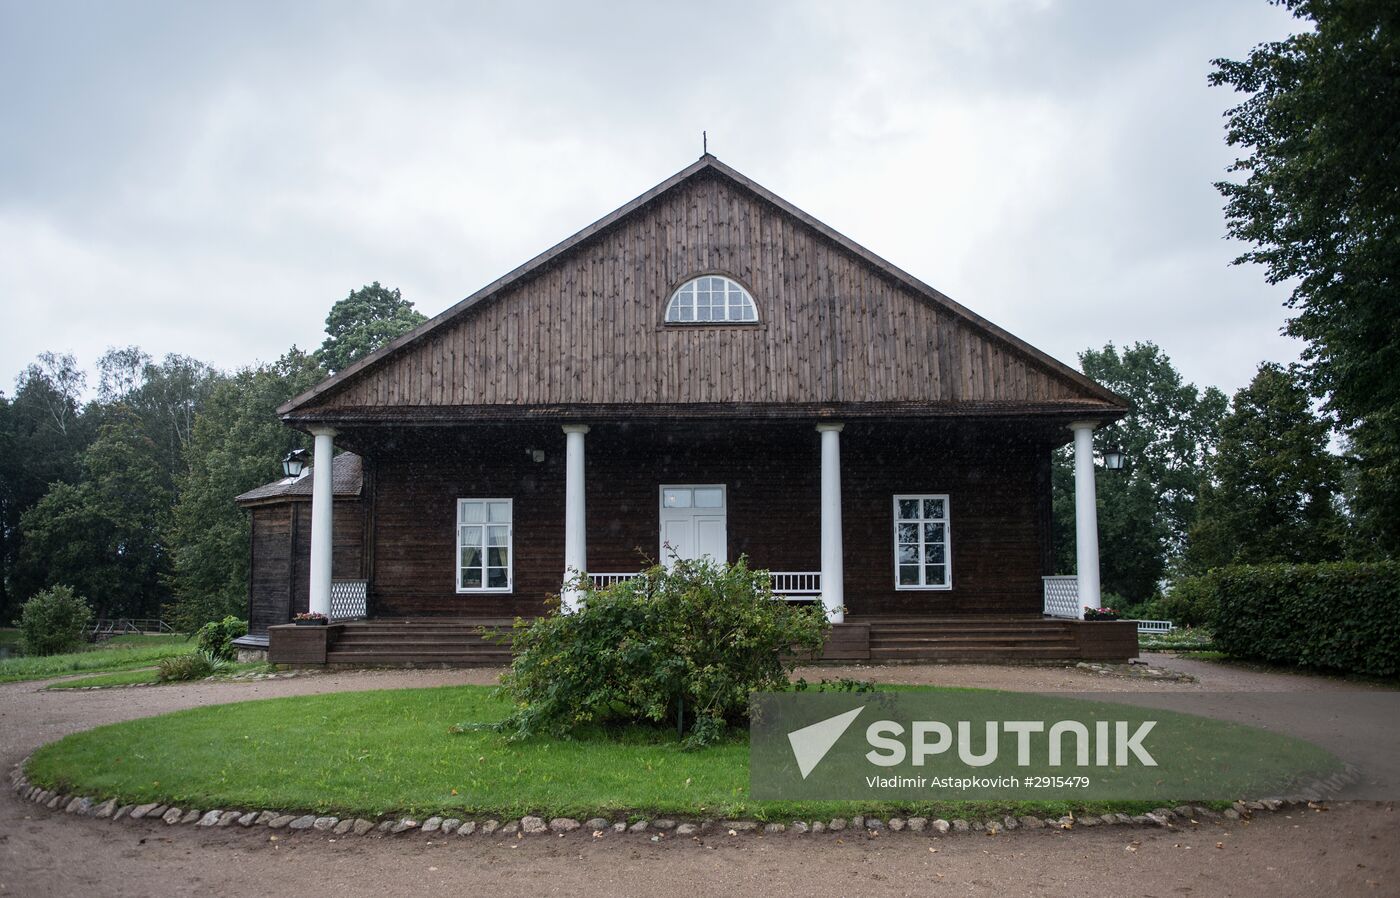 Alexander Pushkin Museum at Mikhailovskoye Estate in Pskov Region